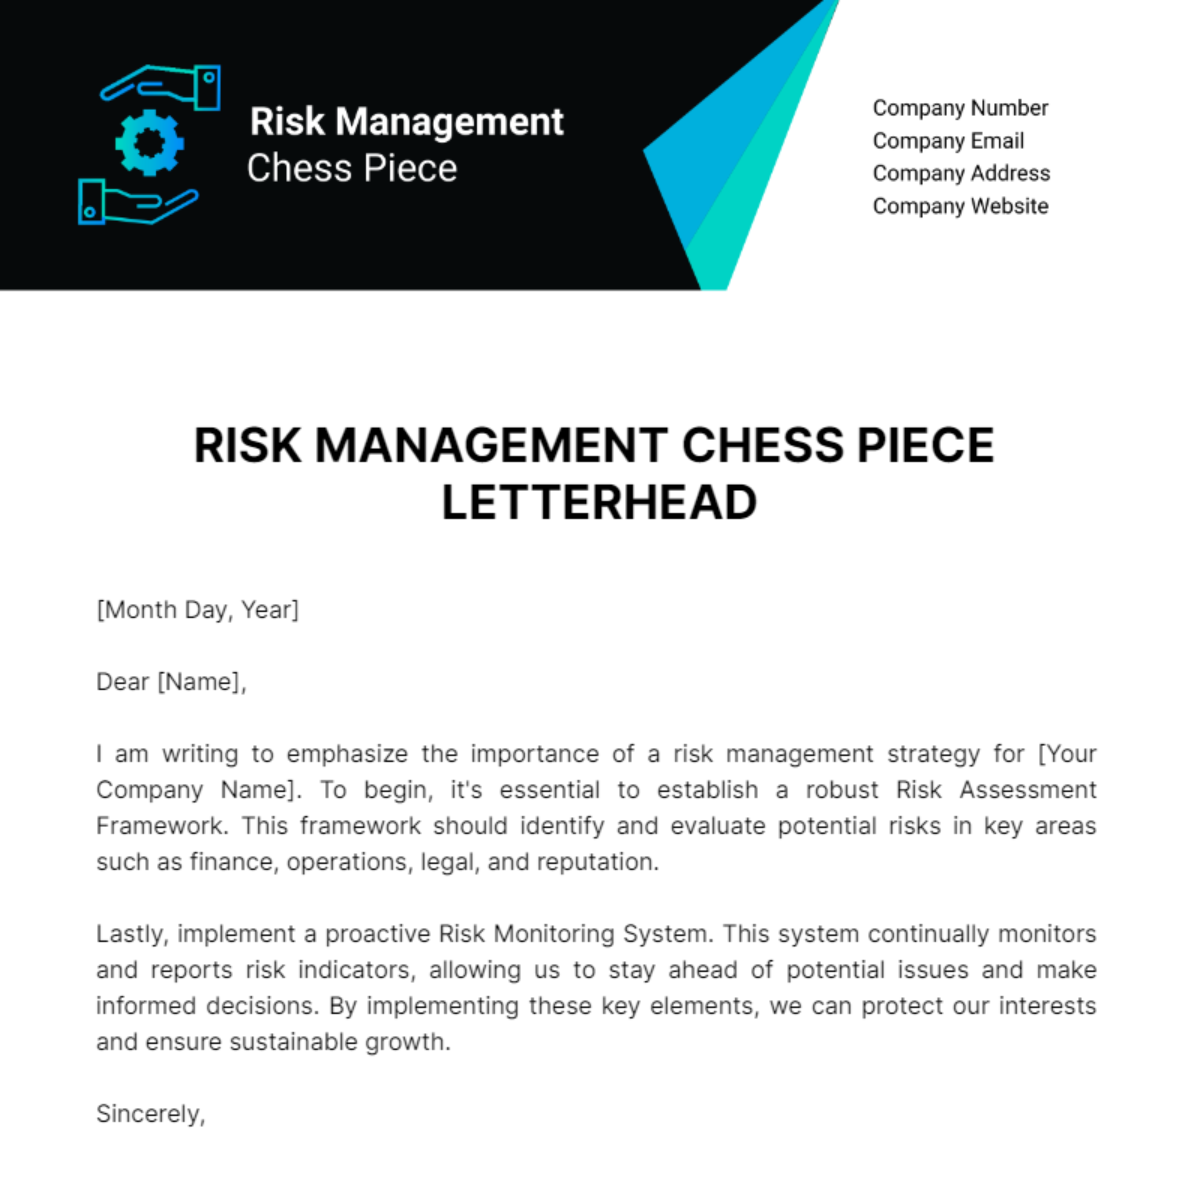 Risk Management Chess Piece Letterhead Template